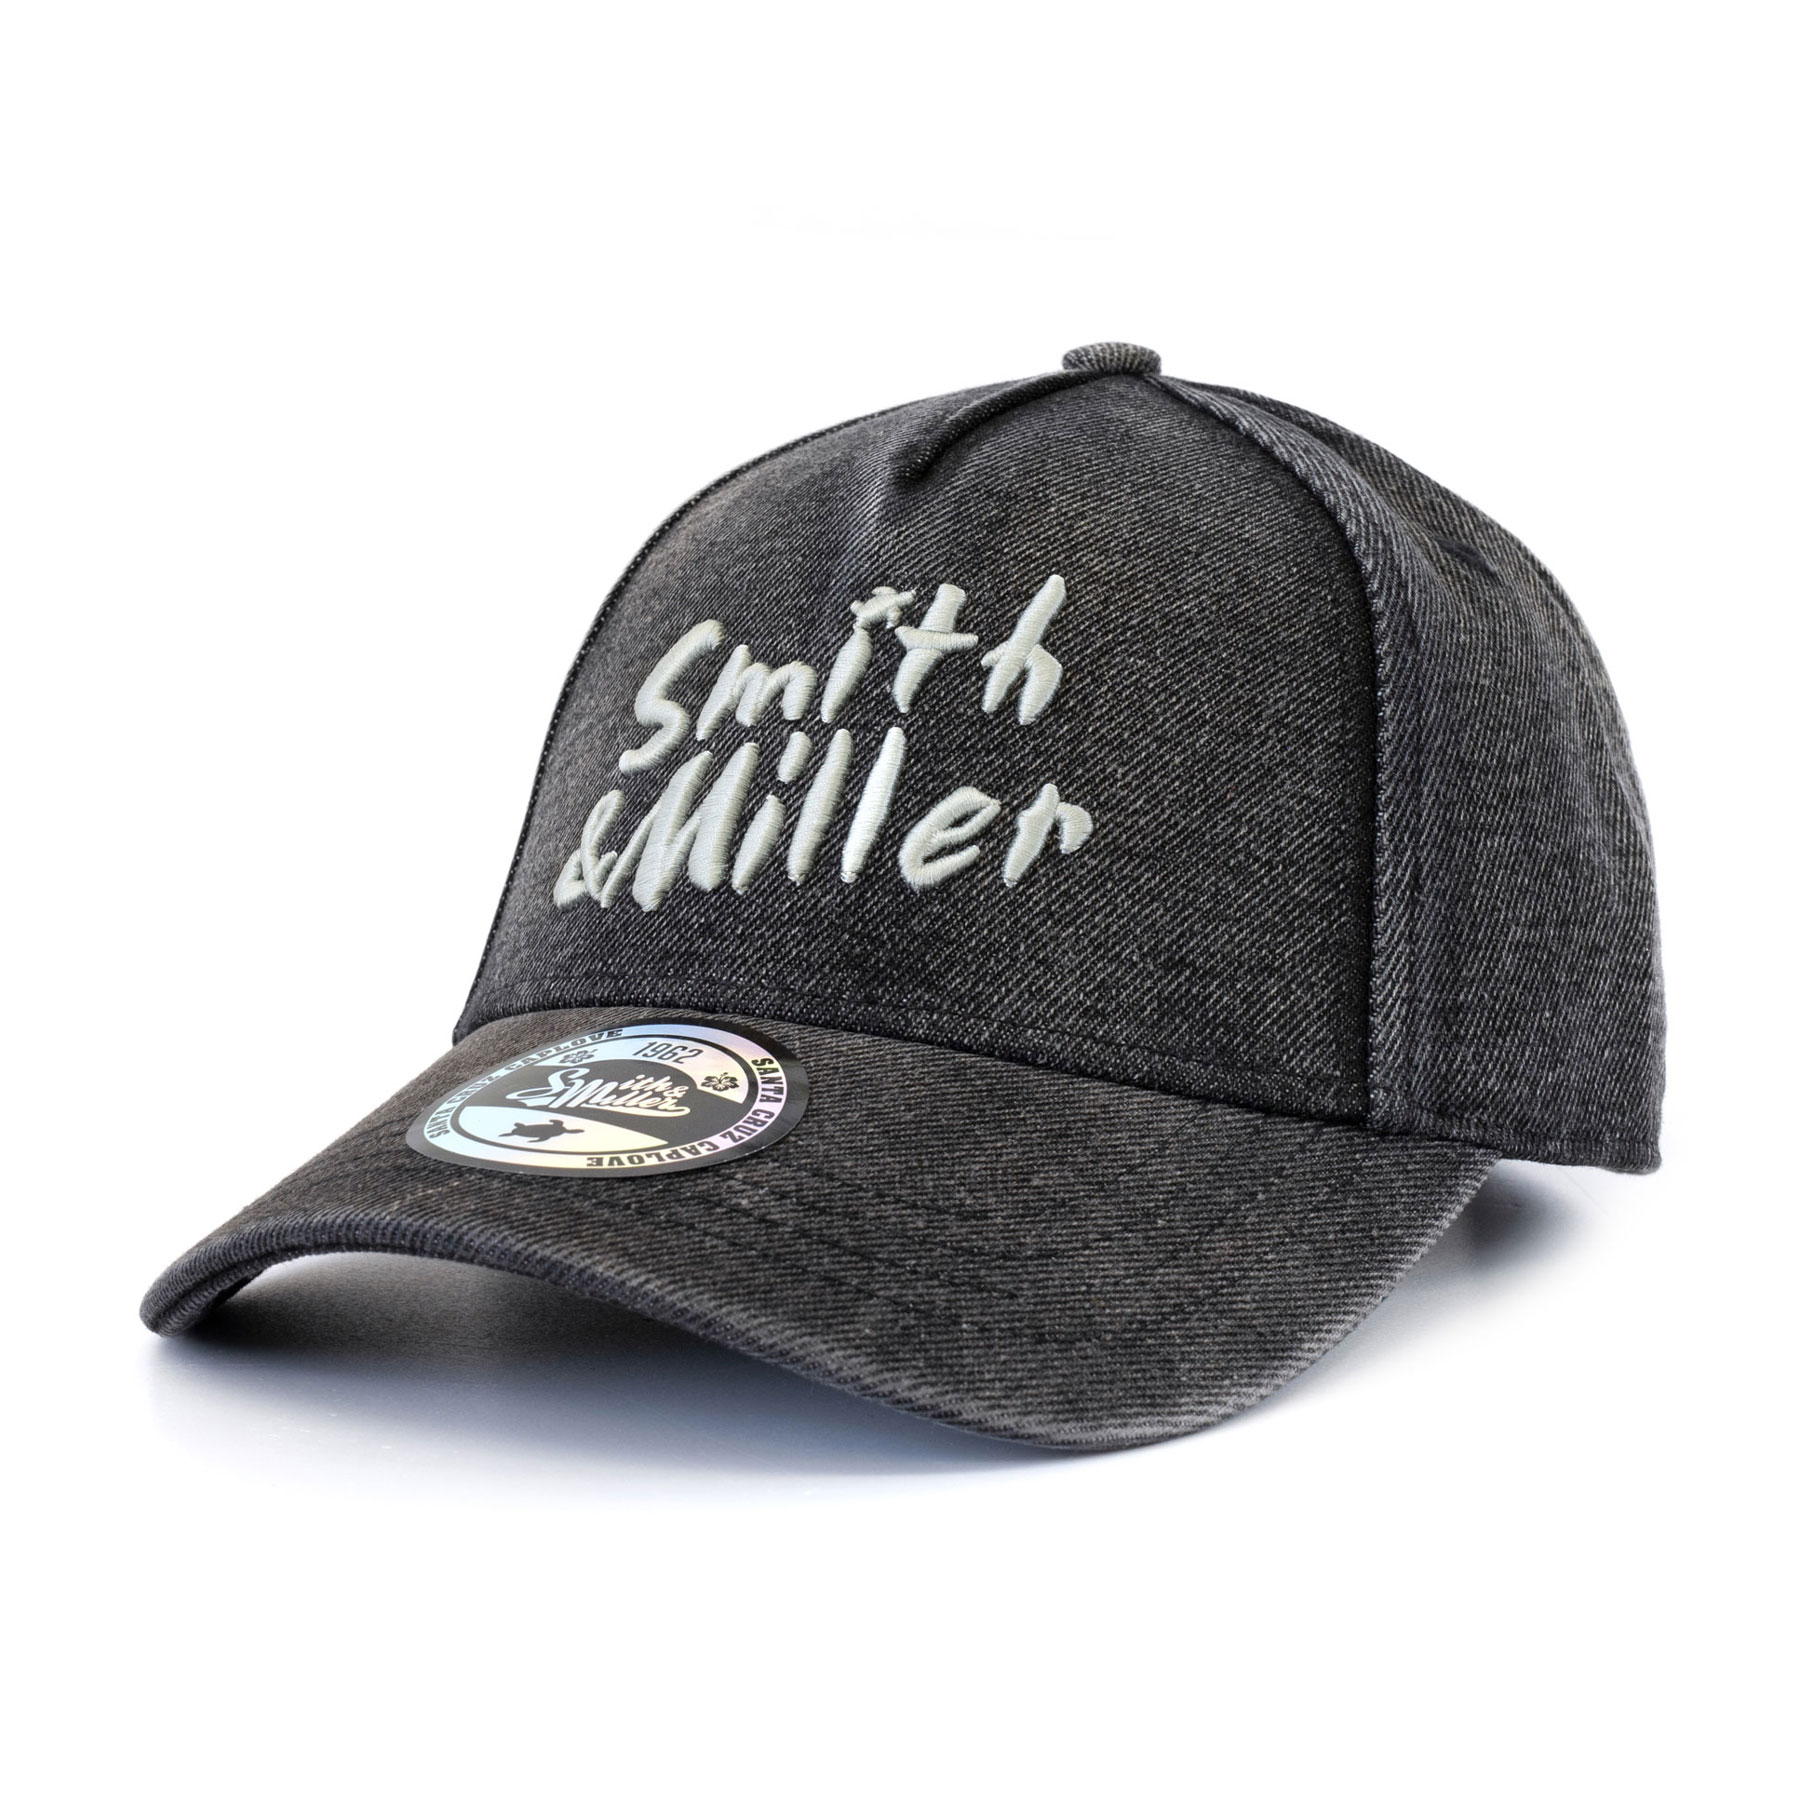 Smith & Miller Veto Unisex  Curved Cap, black